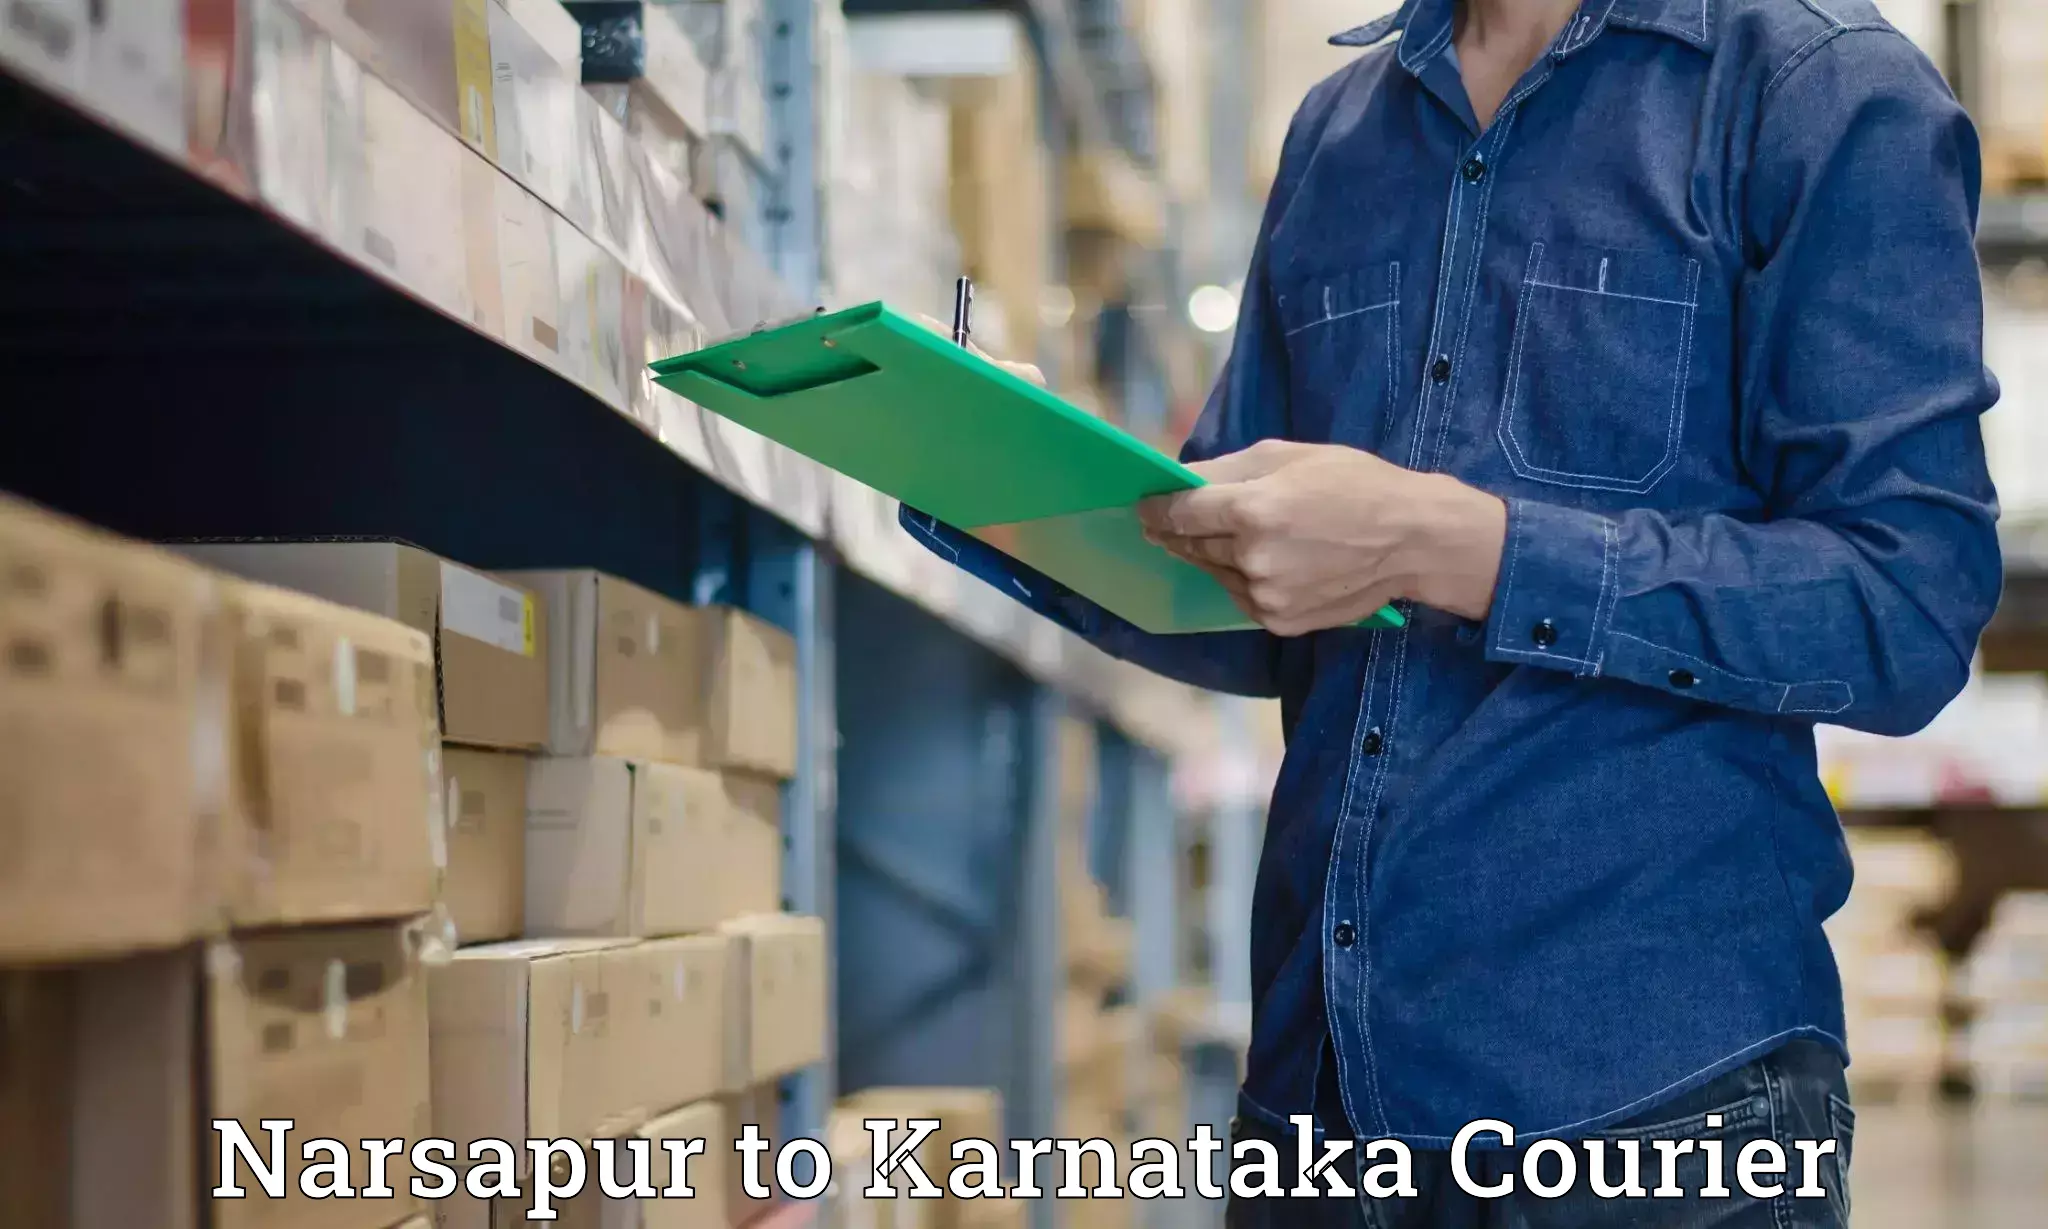 User-friendly courier app Narsapur to Karnataka